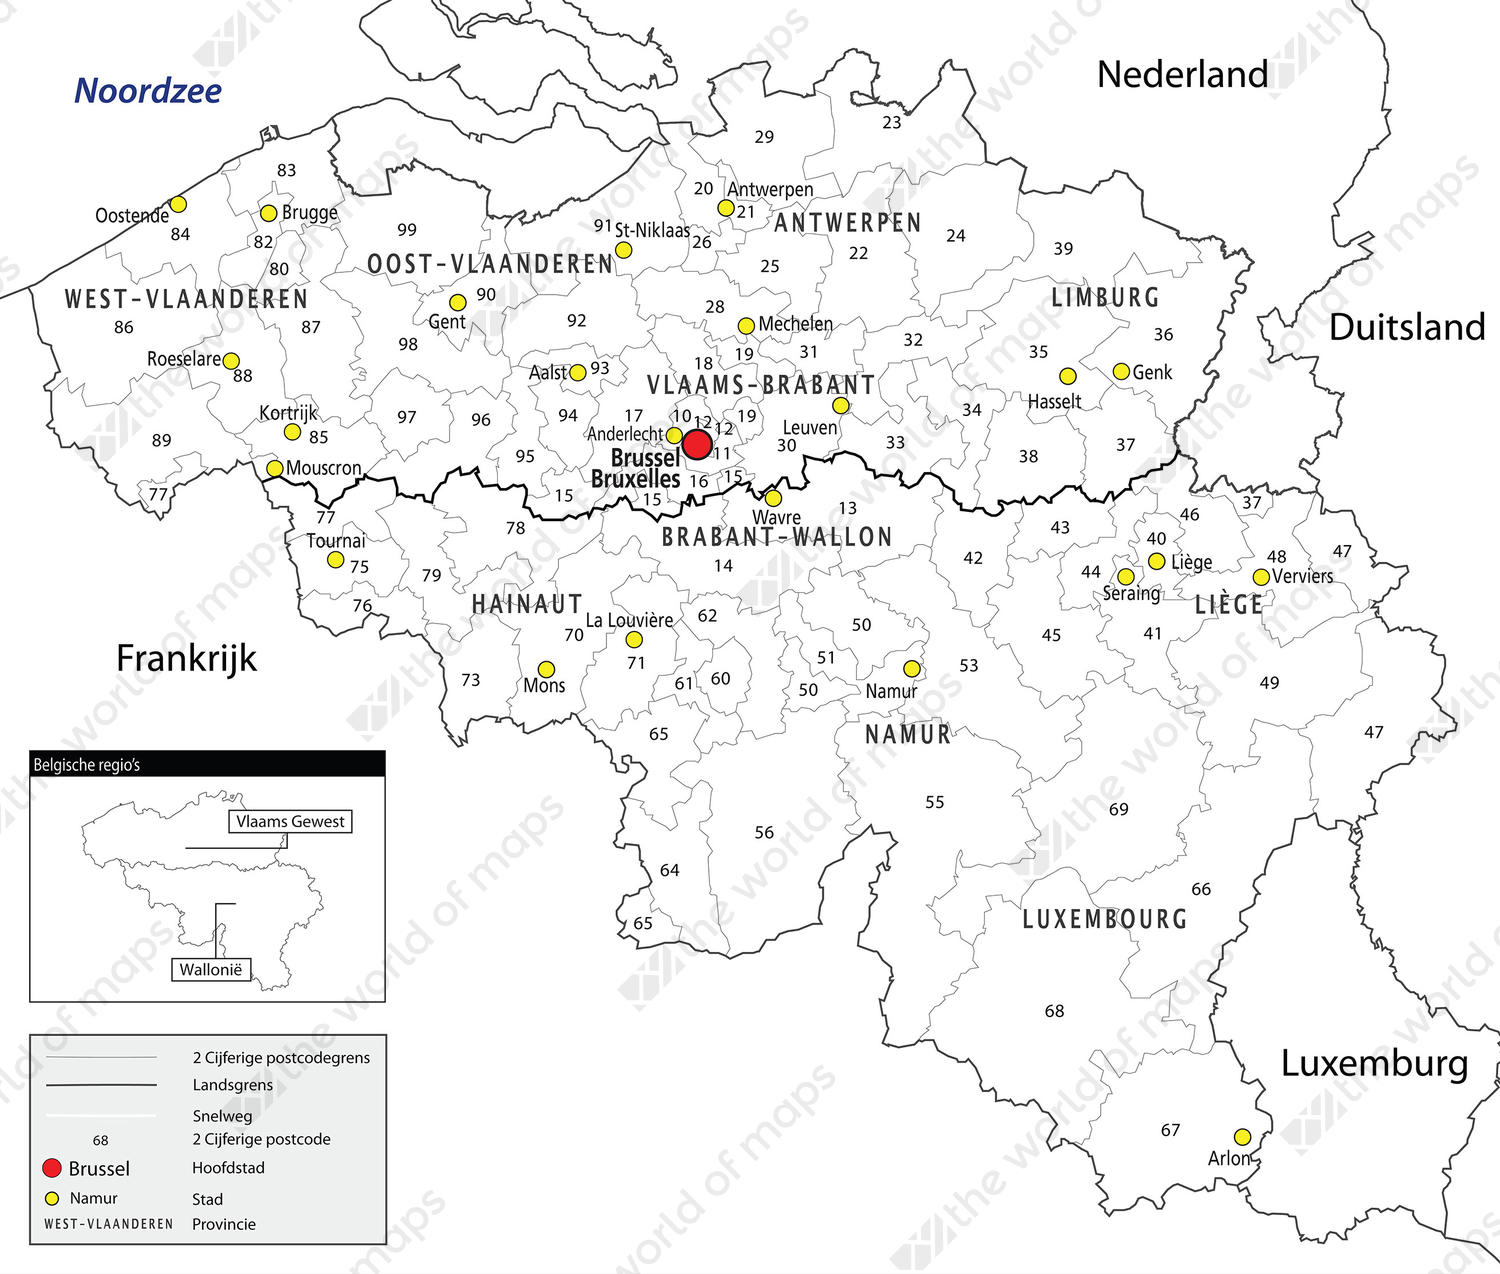 Digital 2 Digit Zip Code Map Belgium 647 The World Of Maps Com